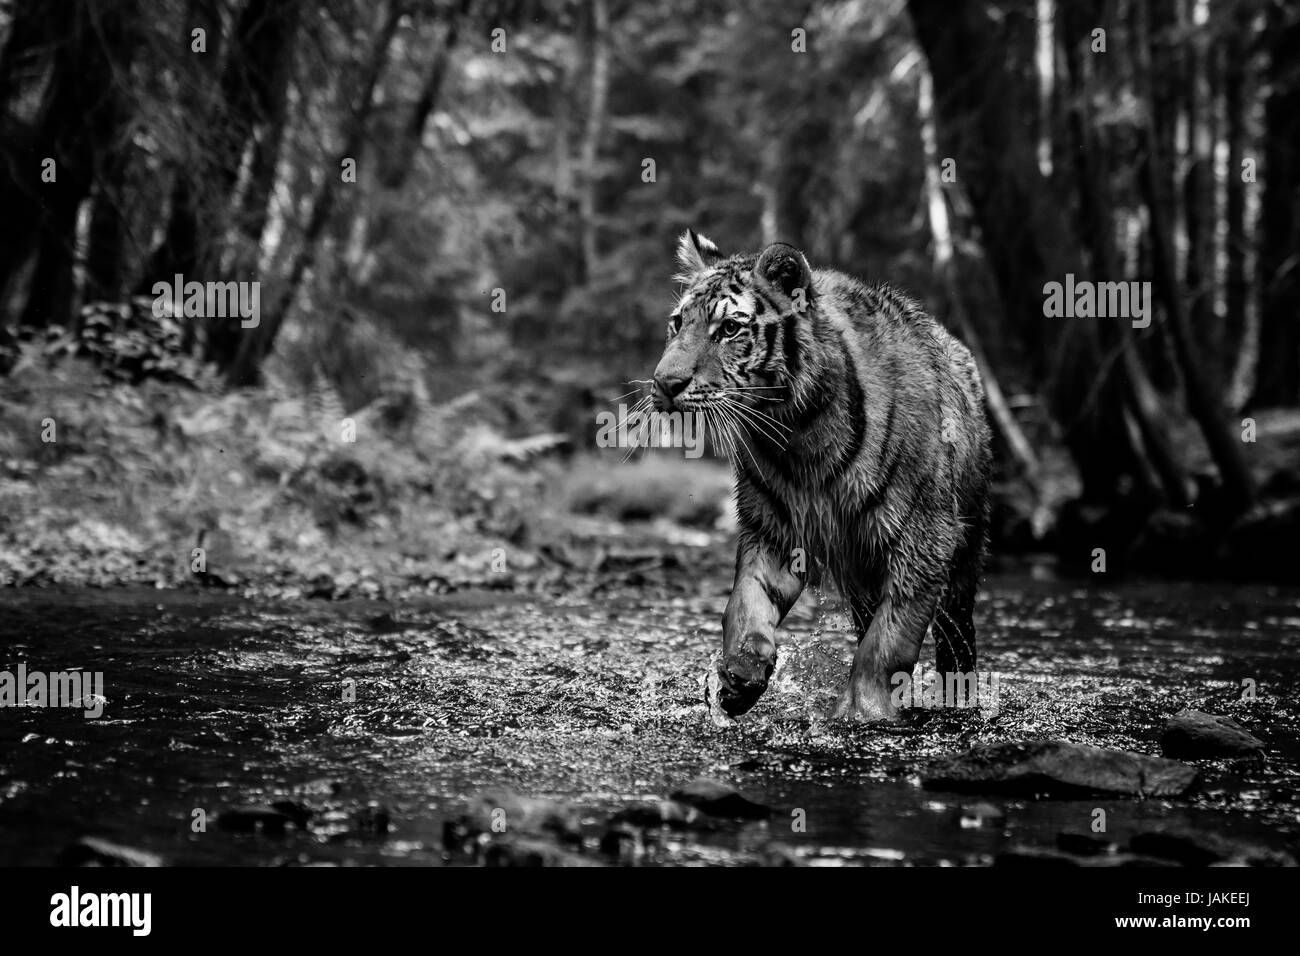 Siberian tiger walking in the river Stock Photo